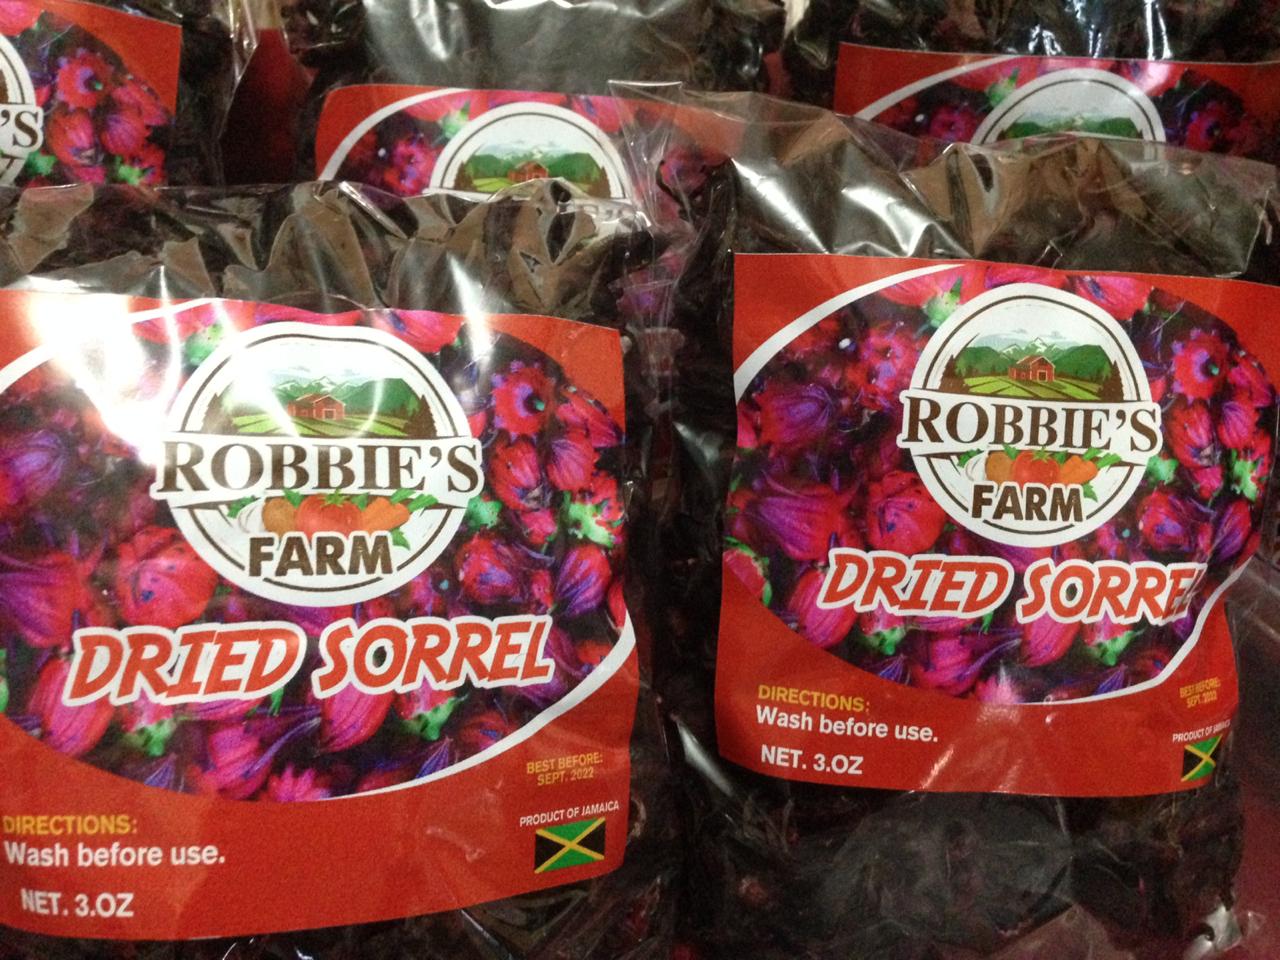 Robbies Dried sorrel